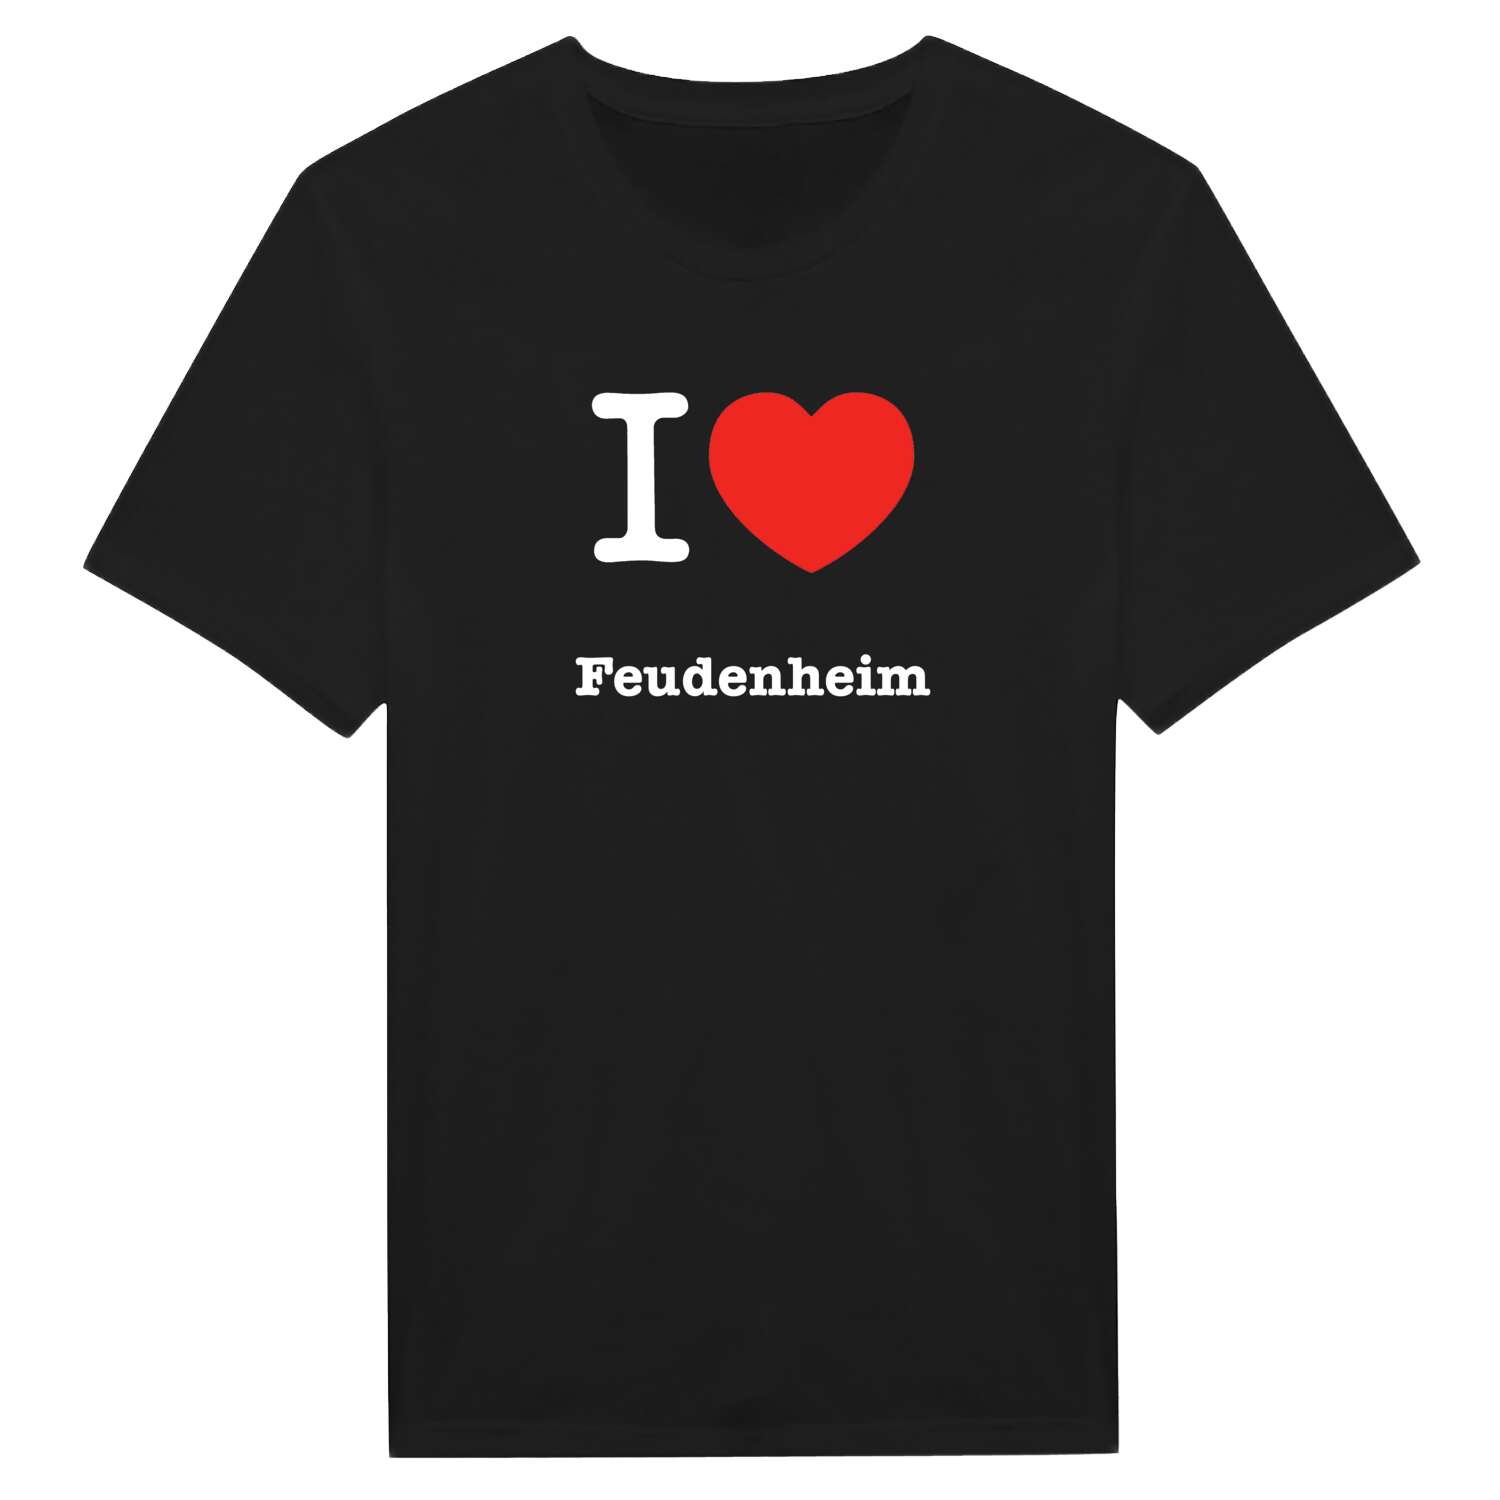 Feudenheim T-Shirt »I love«